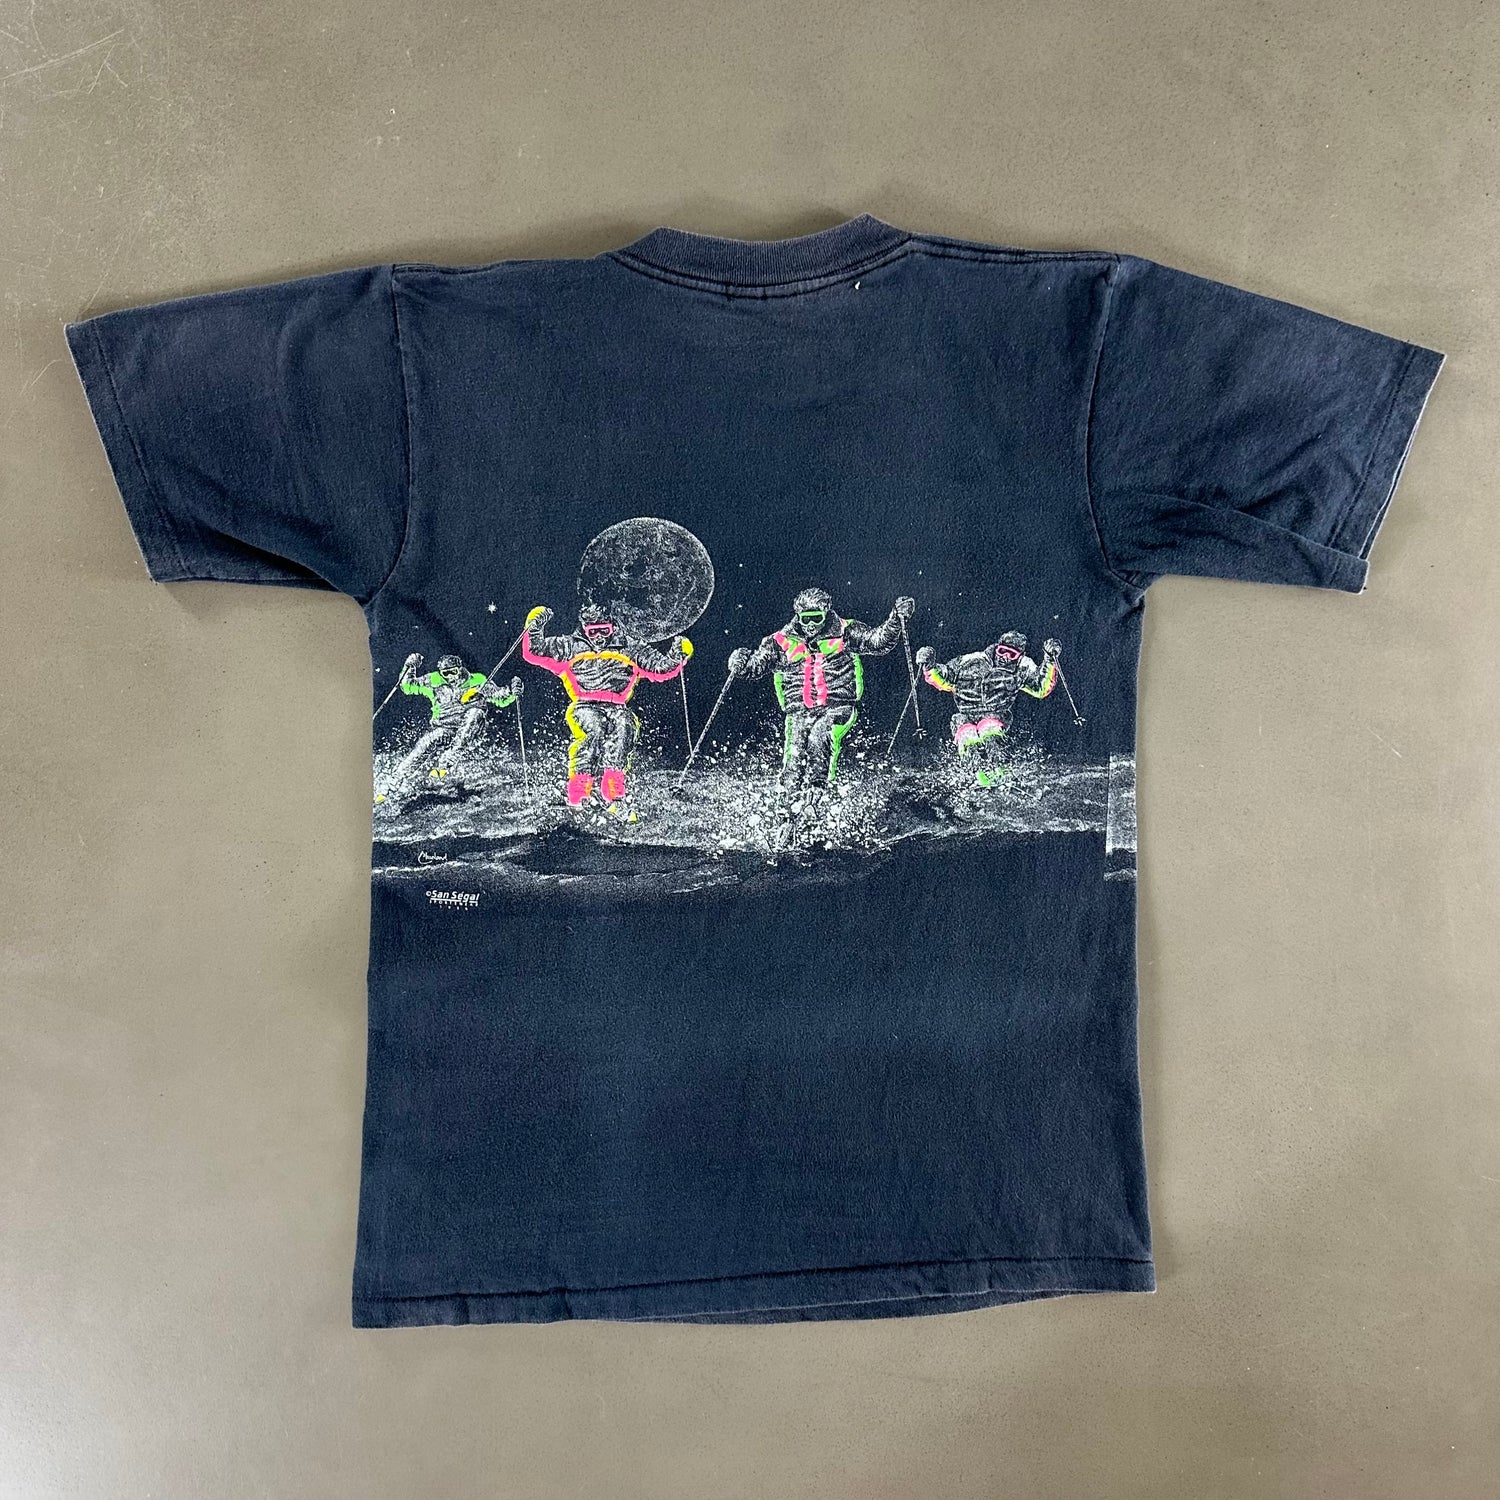 Vintage 1989 Ski T-shirt size Medium